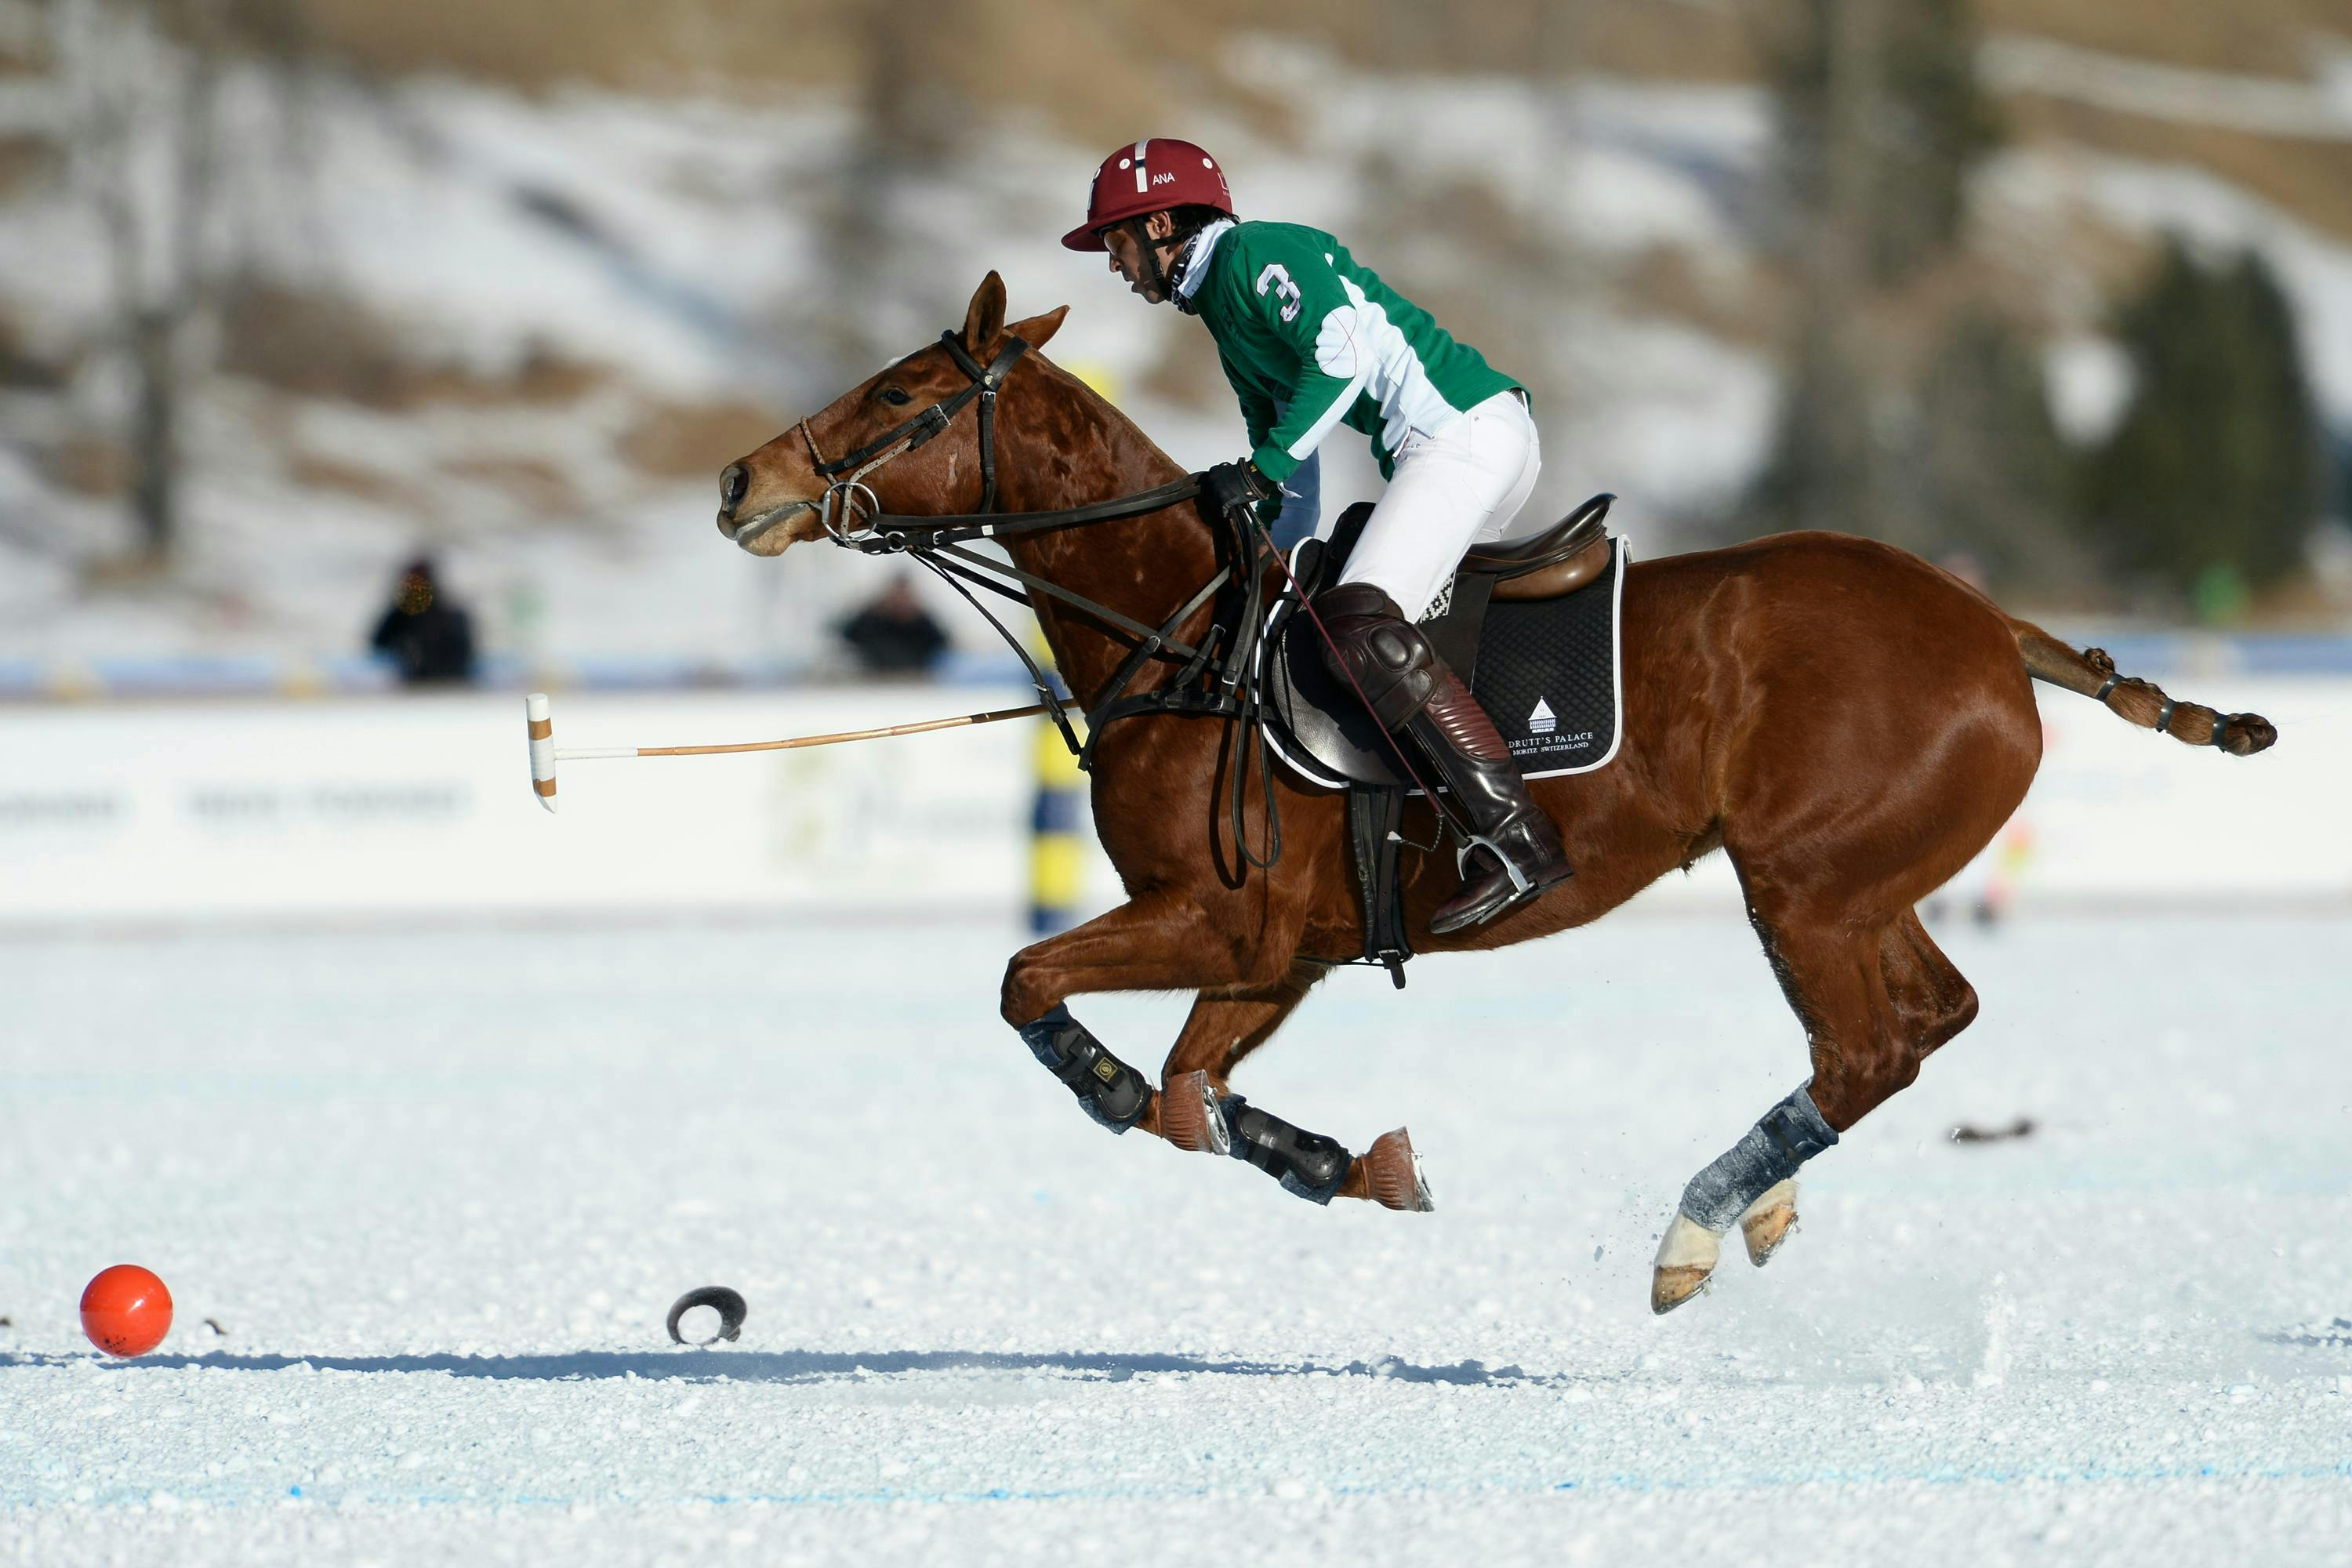 snow polo world cup st moritz 2017 day 1 badrutts palace maserati 27/01/2017 horse mammal animal person human helmet clothing apparel equestrian